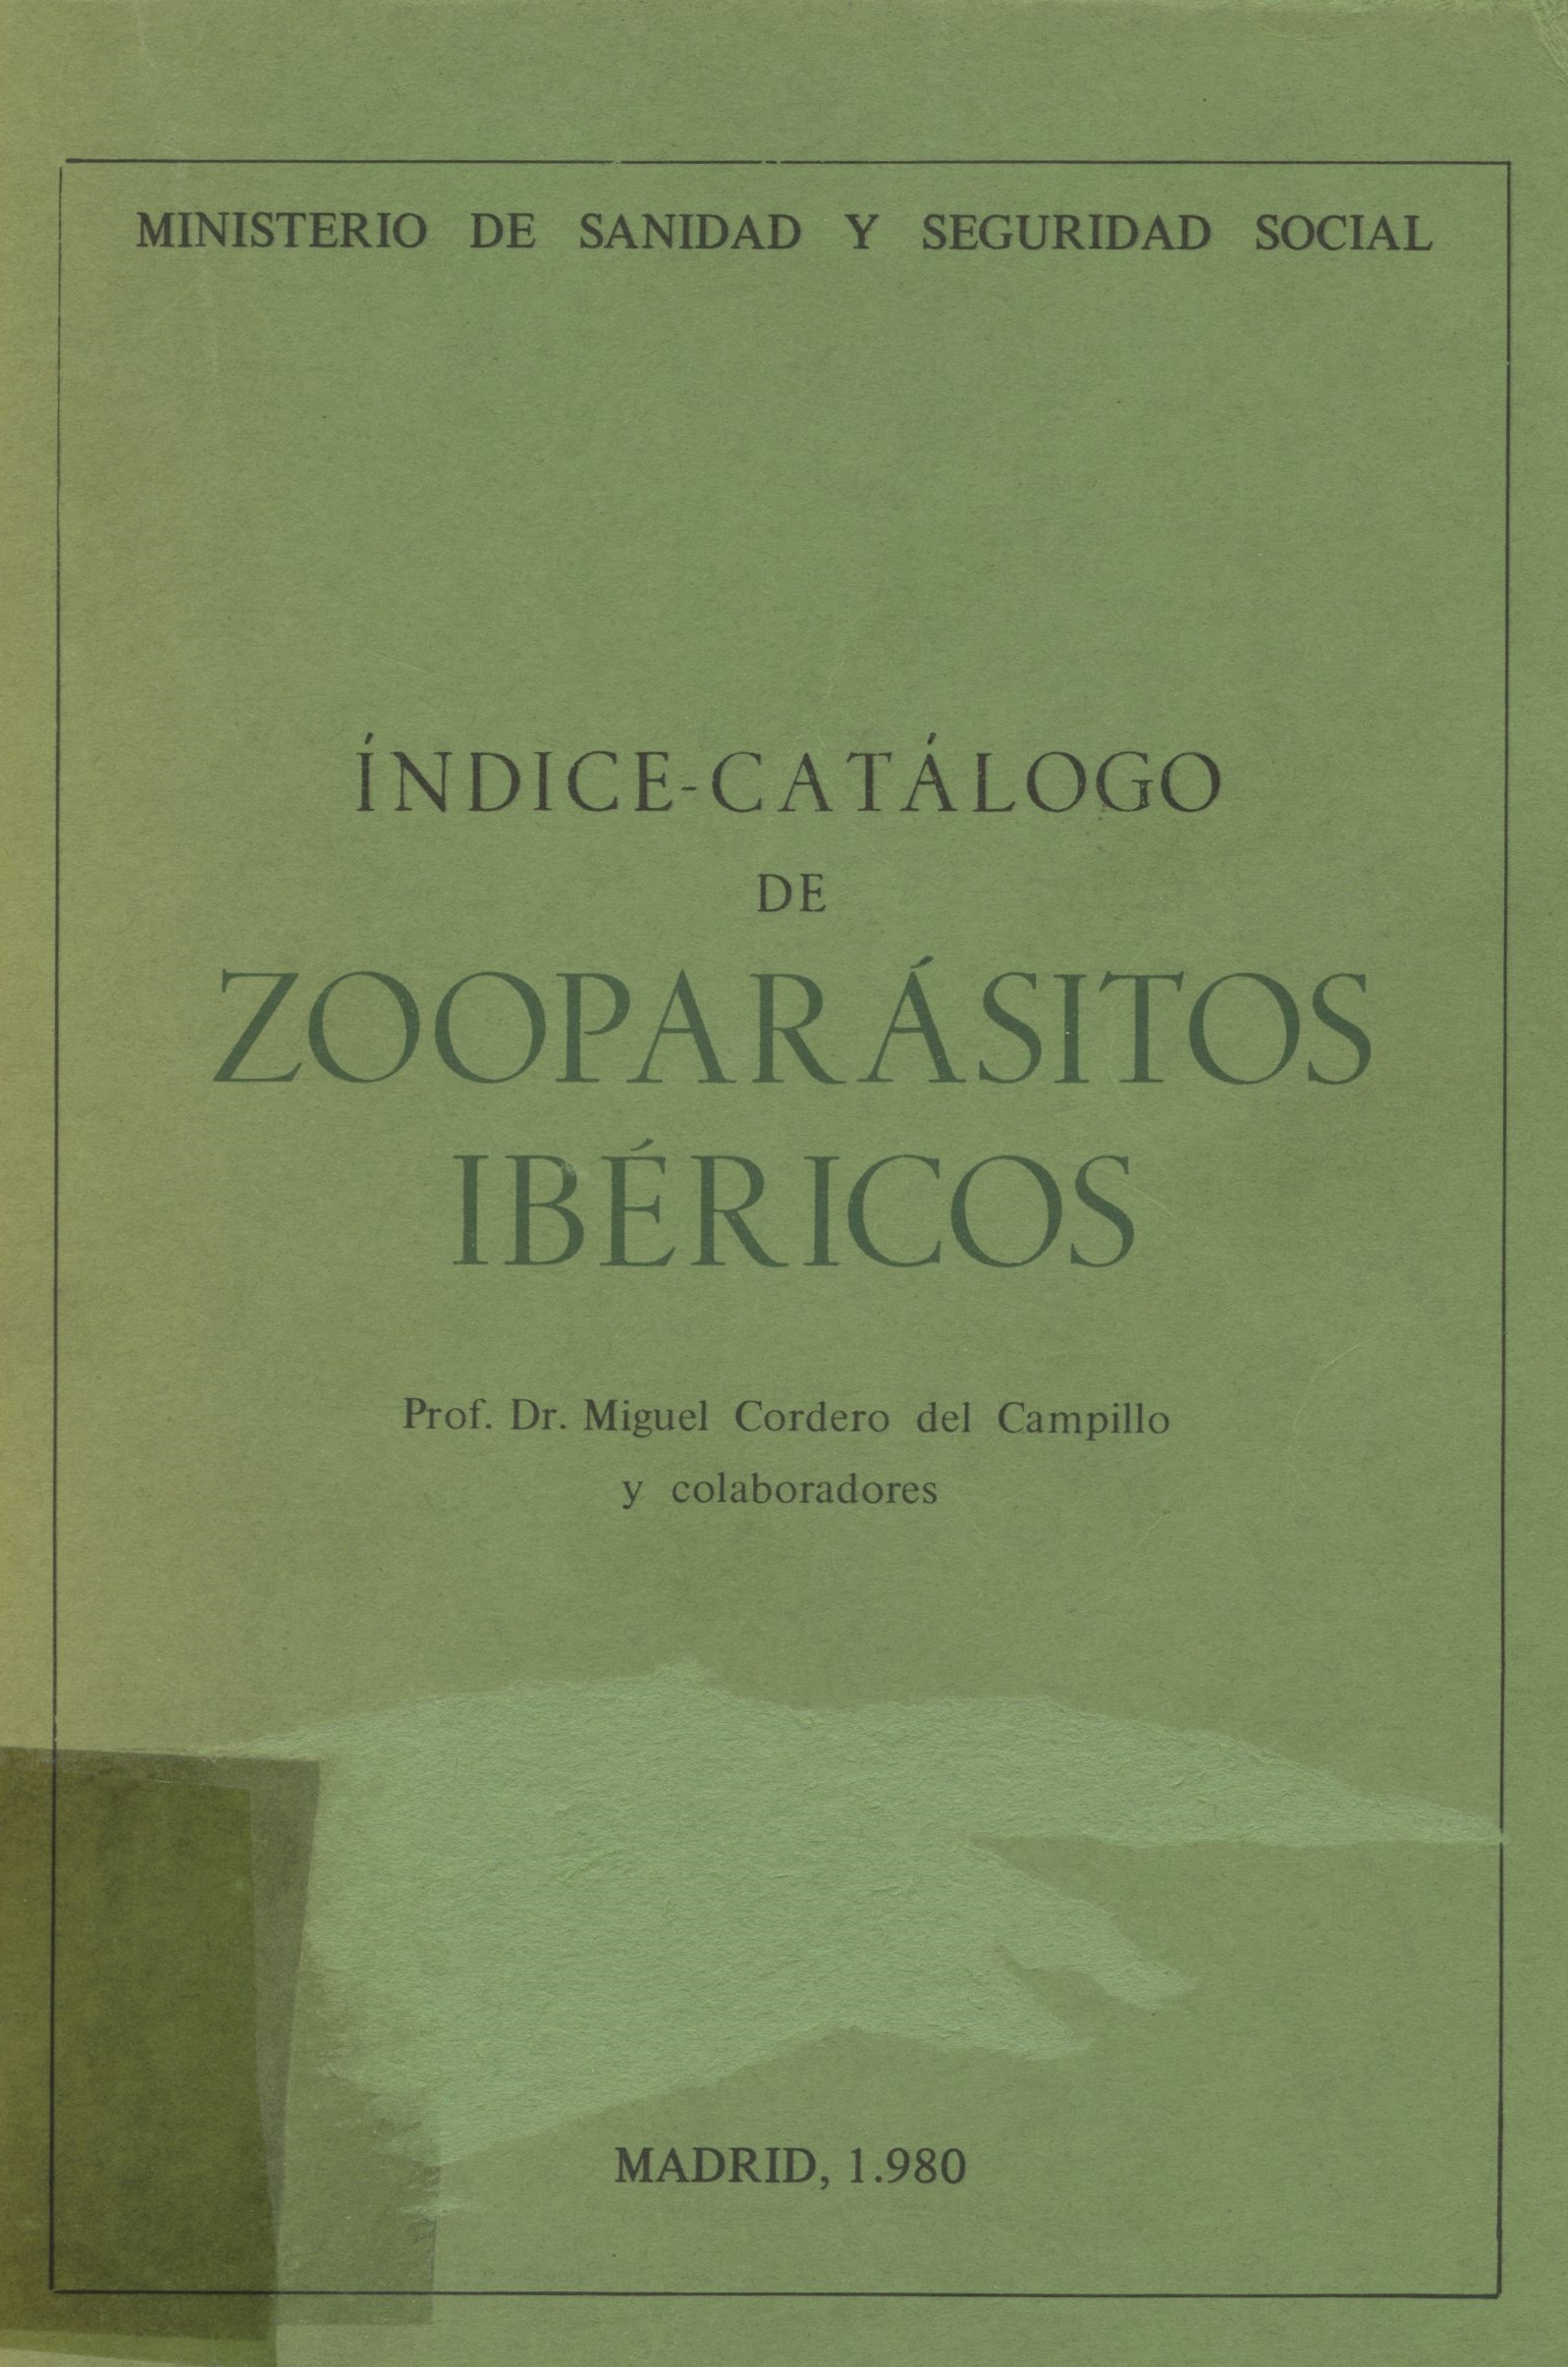 Imagen de portada del libro Índice-Catálogo de Zooparásitos ibéricos